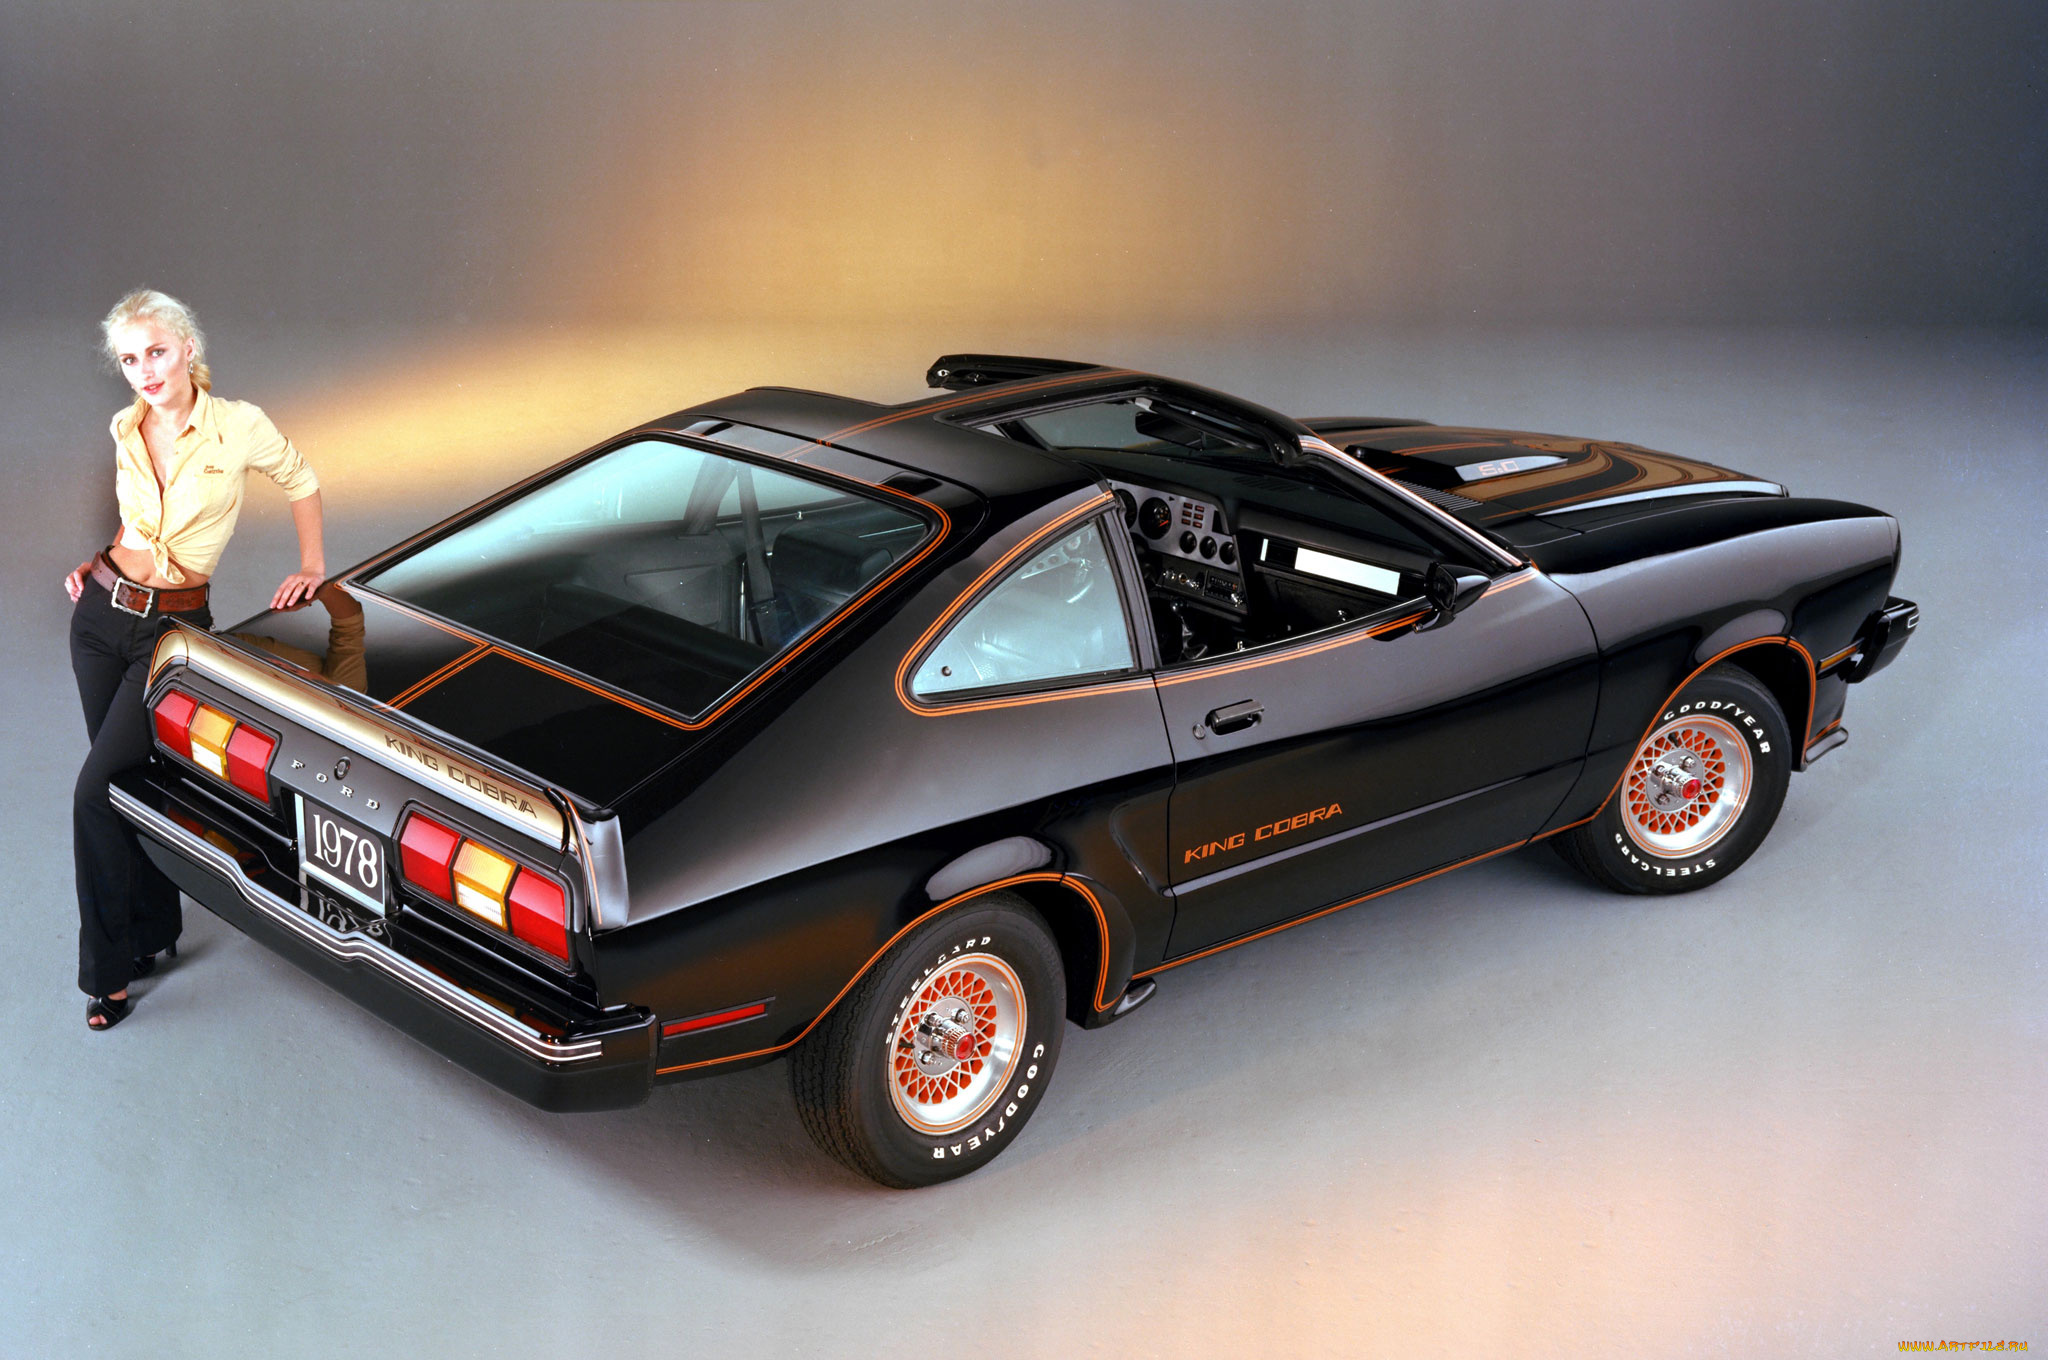 1978-ford-mustang-ii-king-cobra, автомобили, -авто, с, девушками, mustang